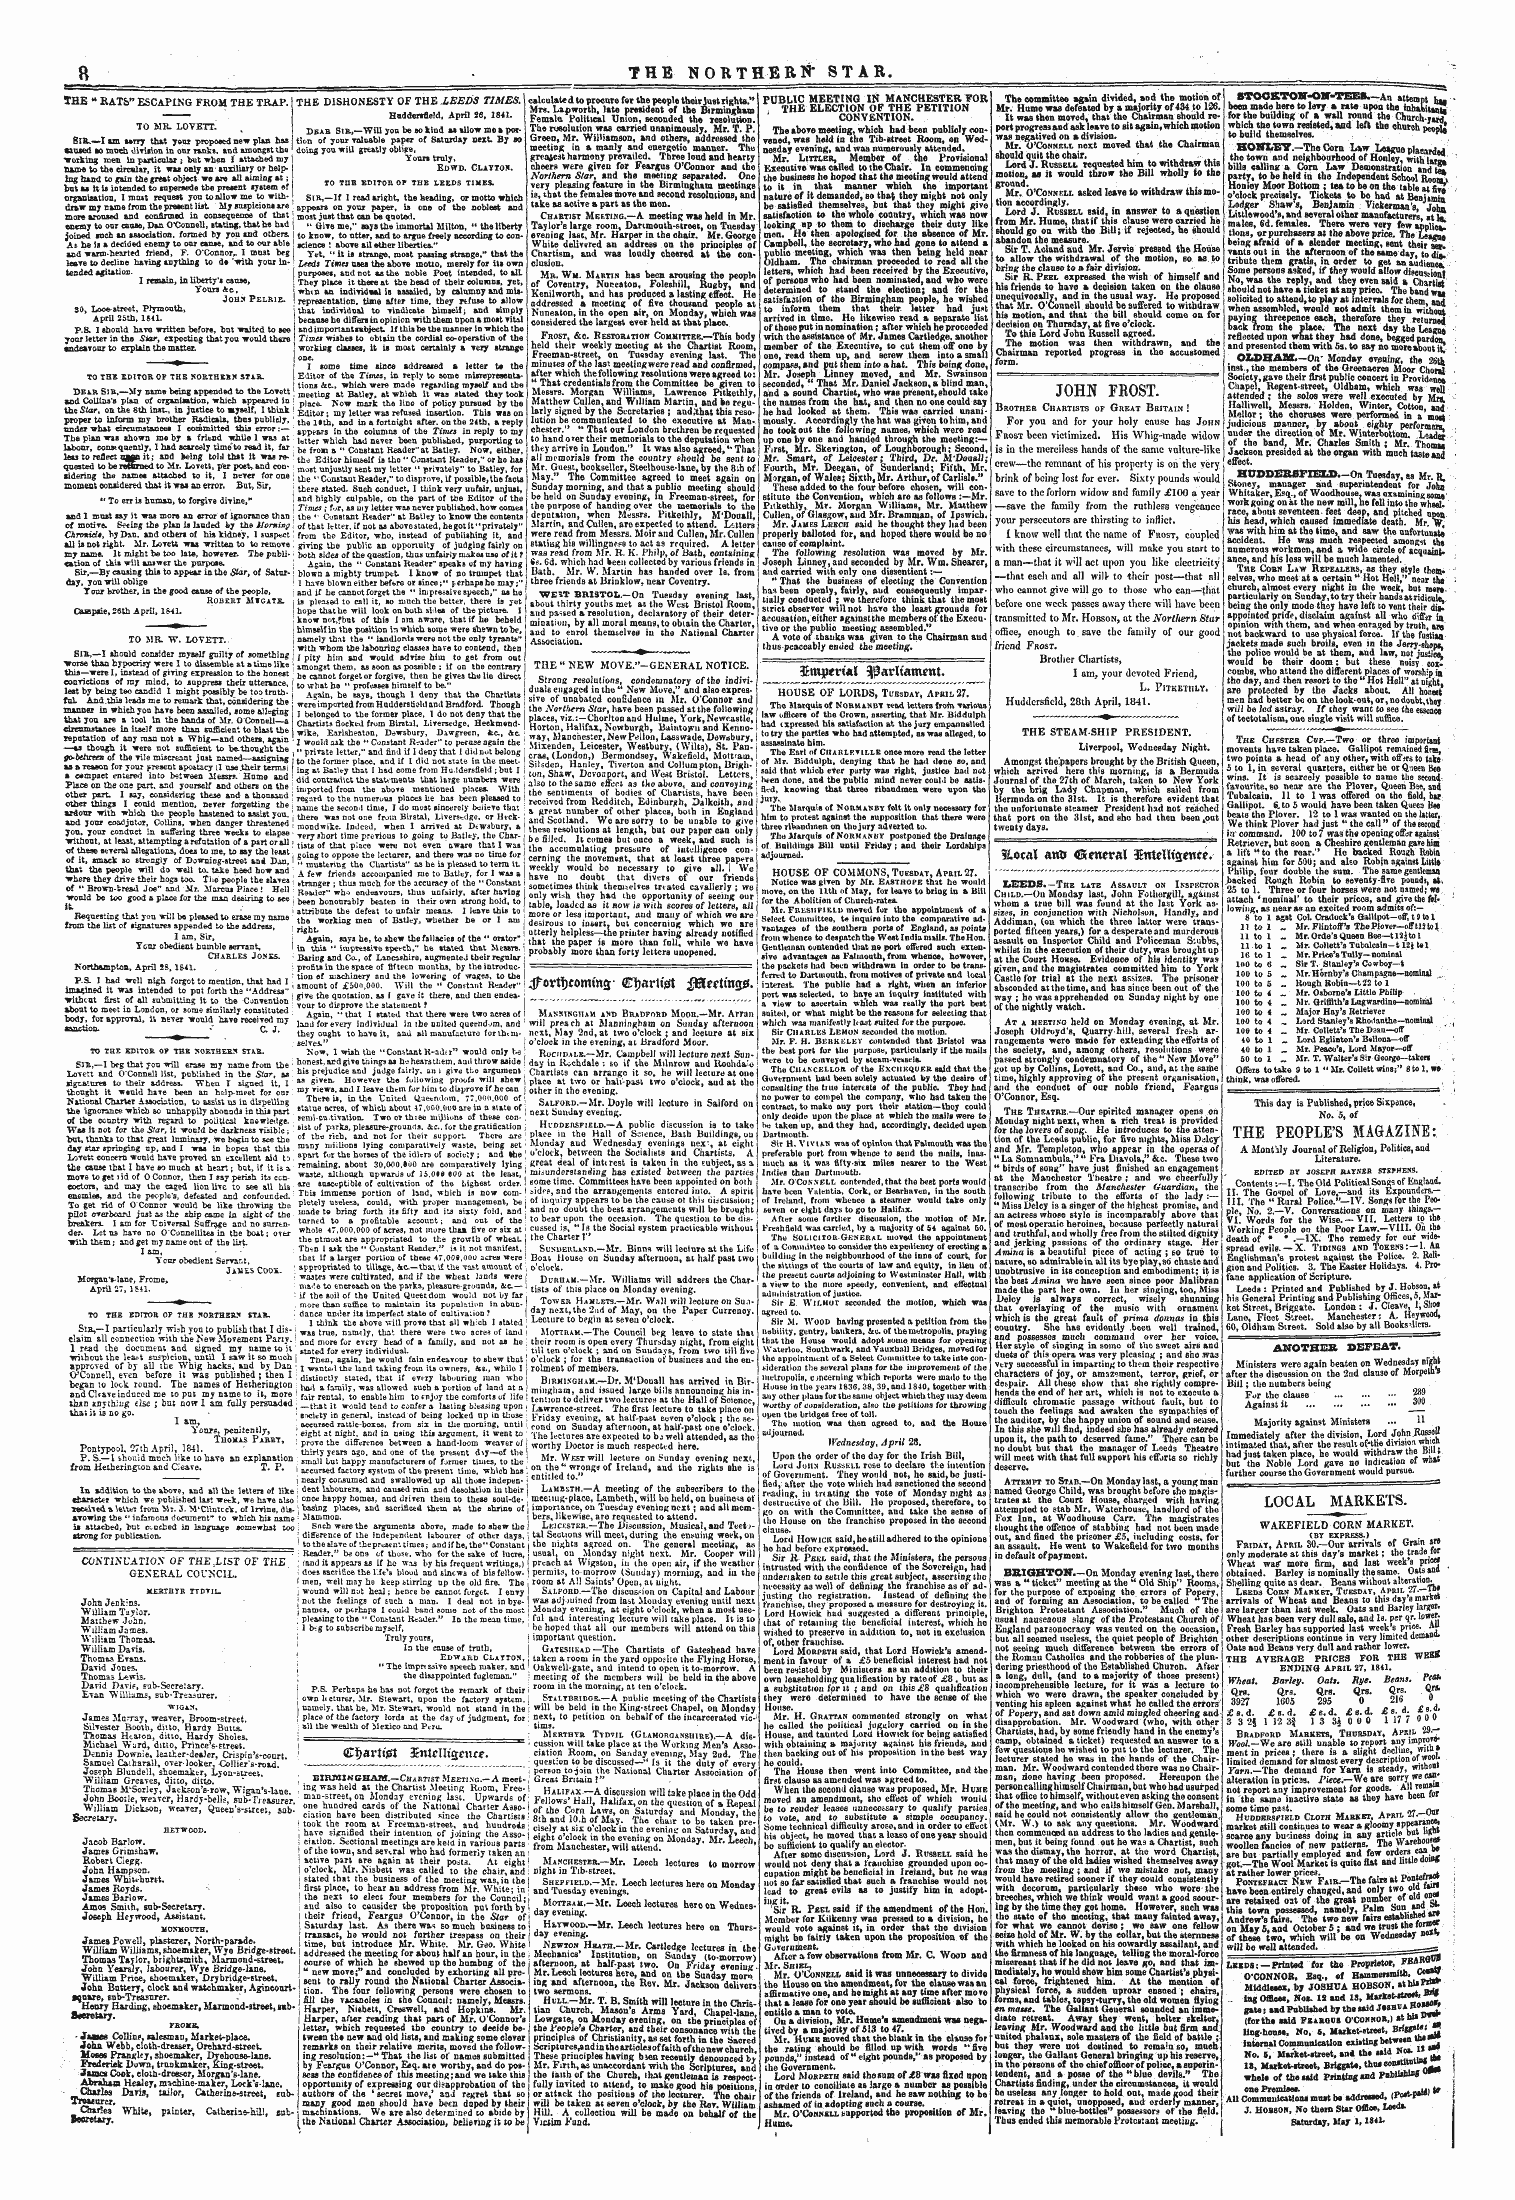 Northern Star (1837-1852): jS F Y, 3rd edition - John Fbost.